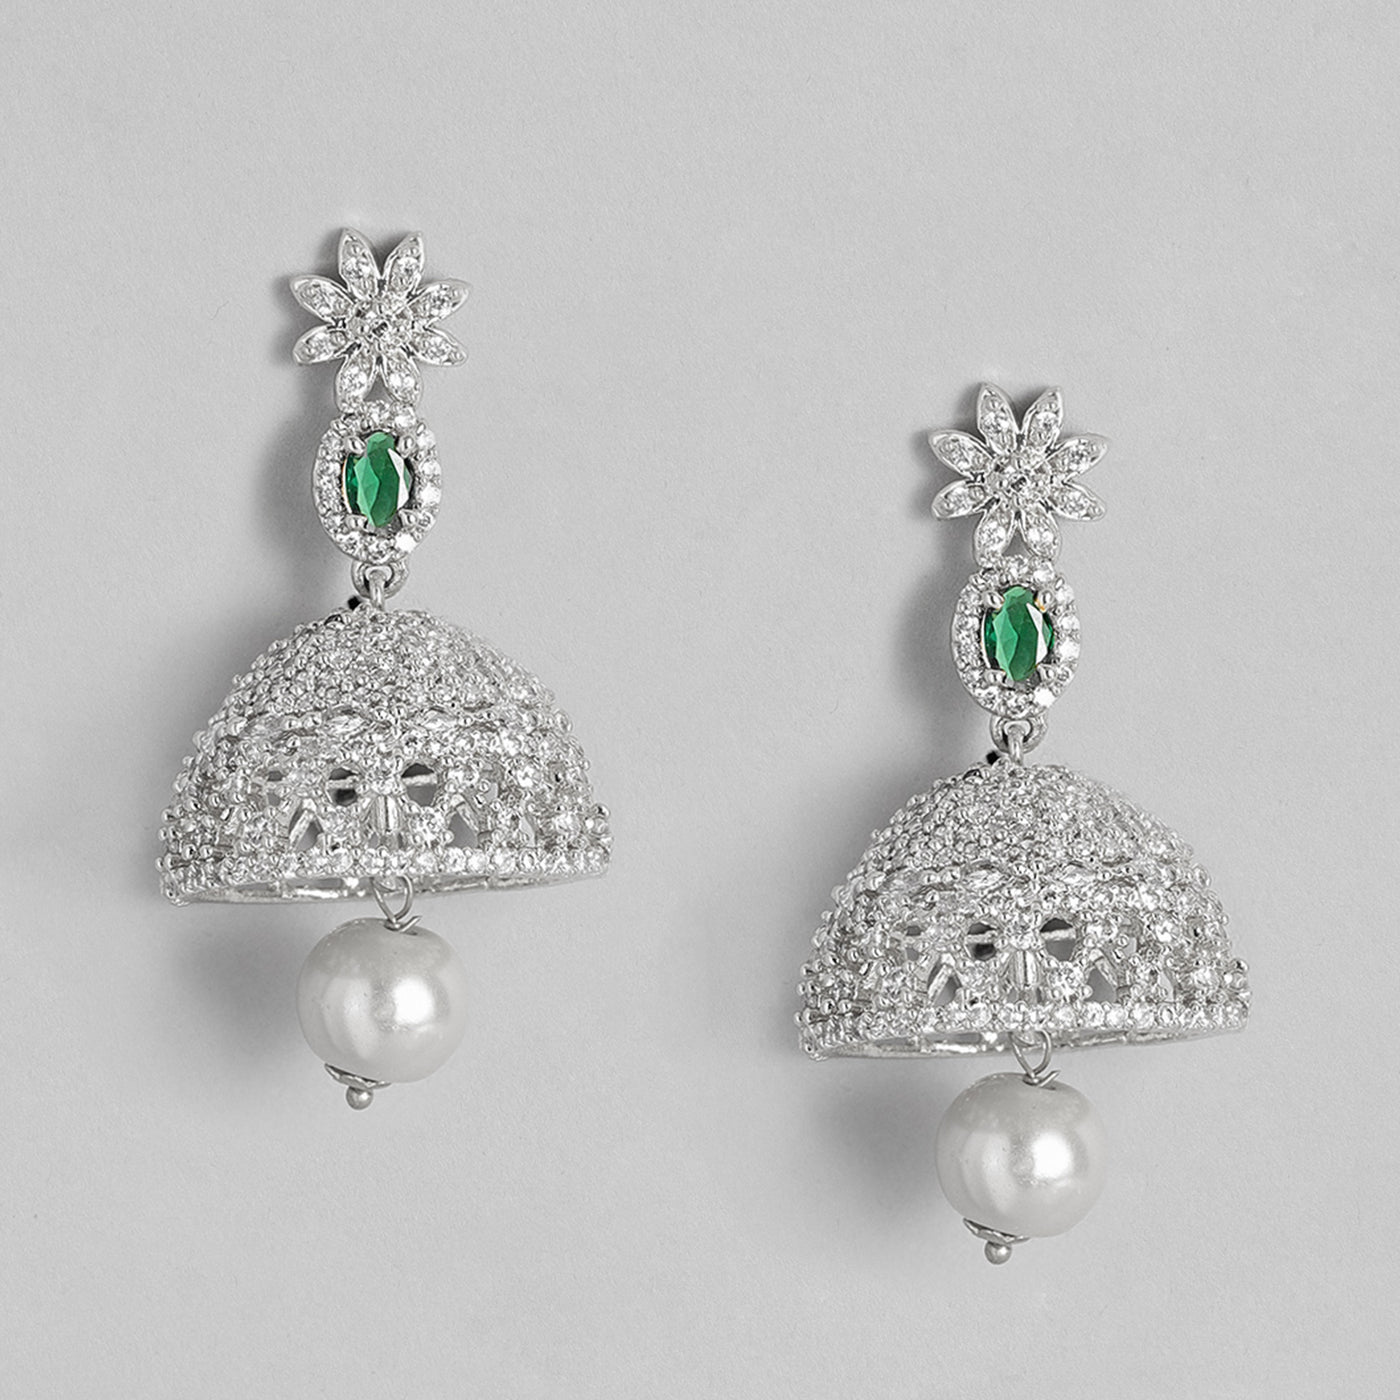 Estele Rhodium Plated CZ Floral Designer Bridal Choker Necklace set with Pearl & Color Stones for Women